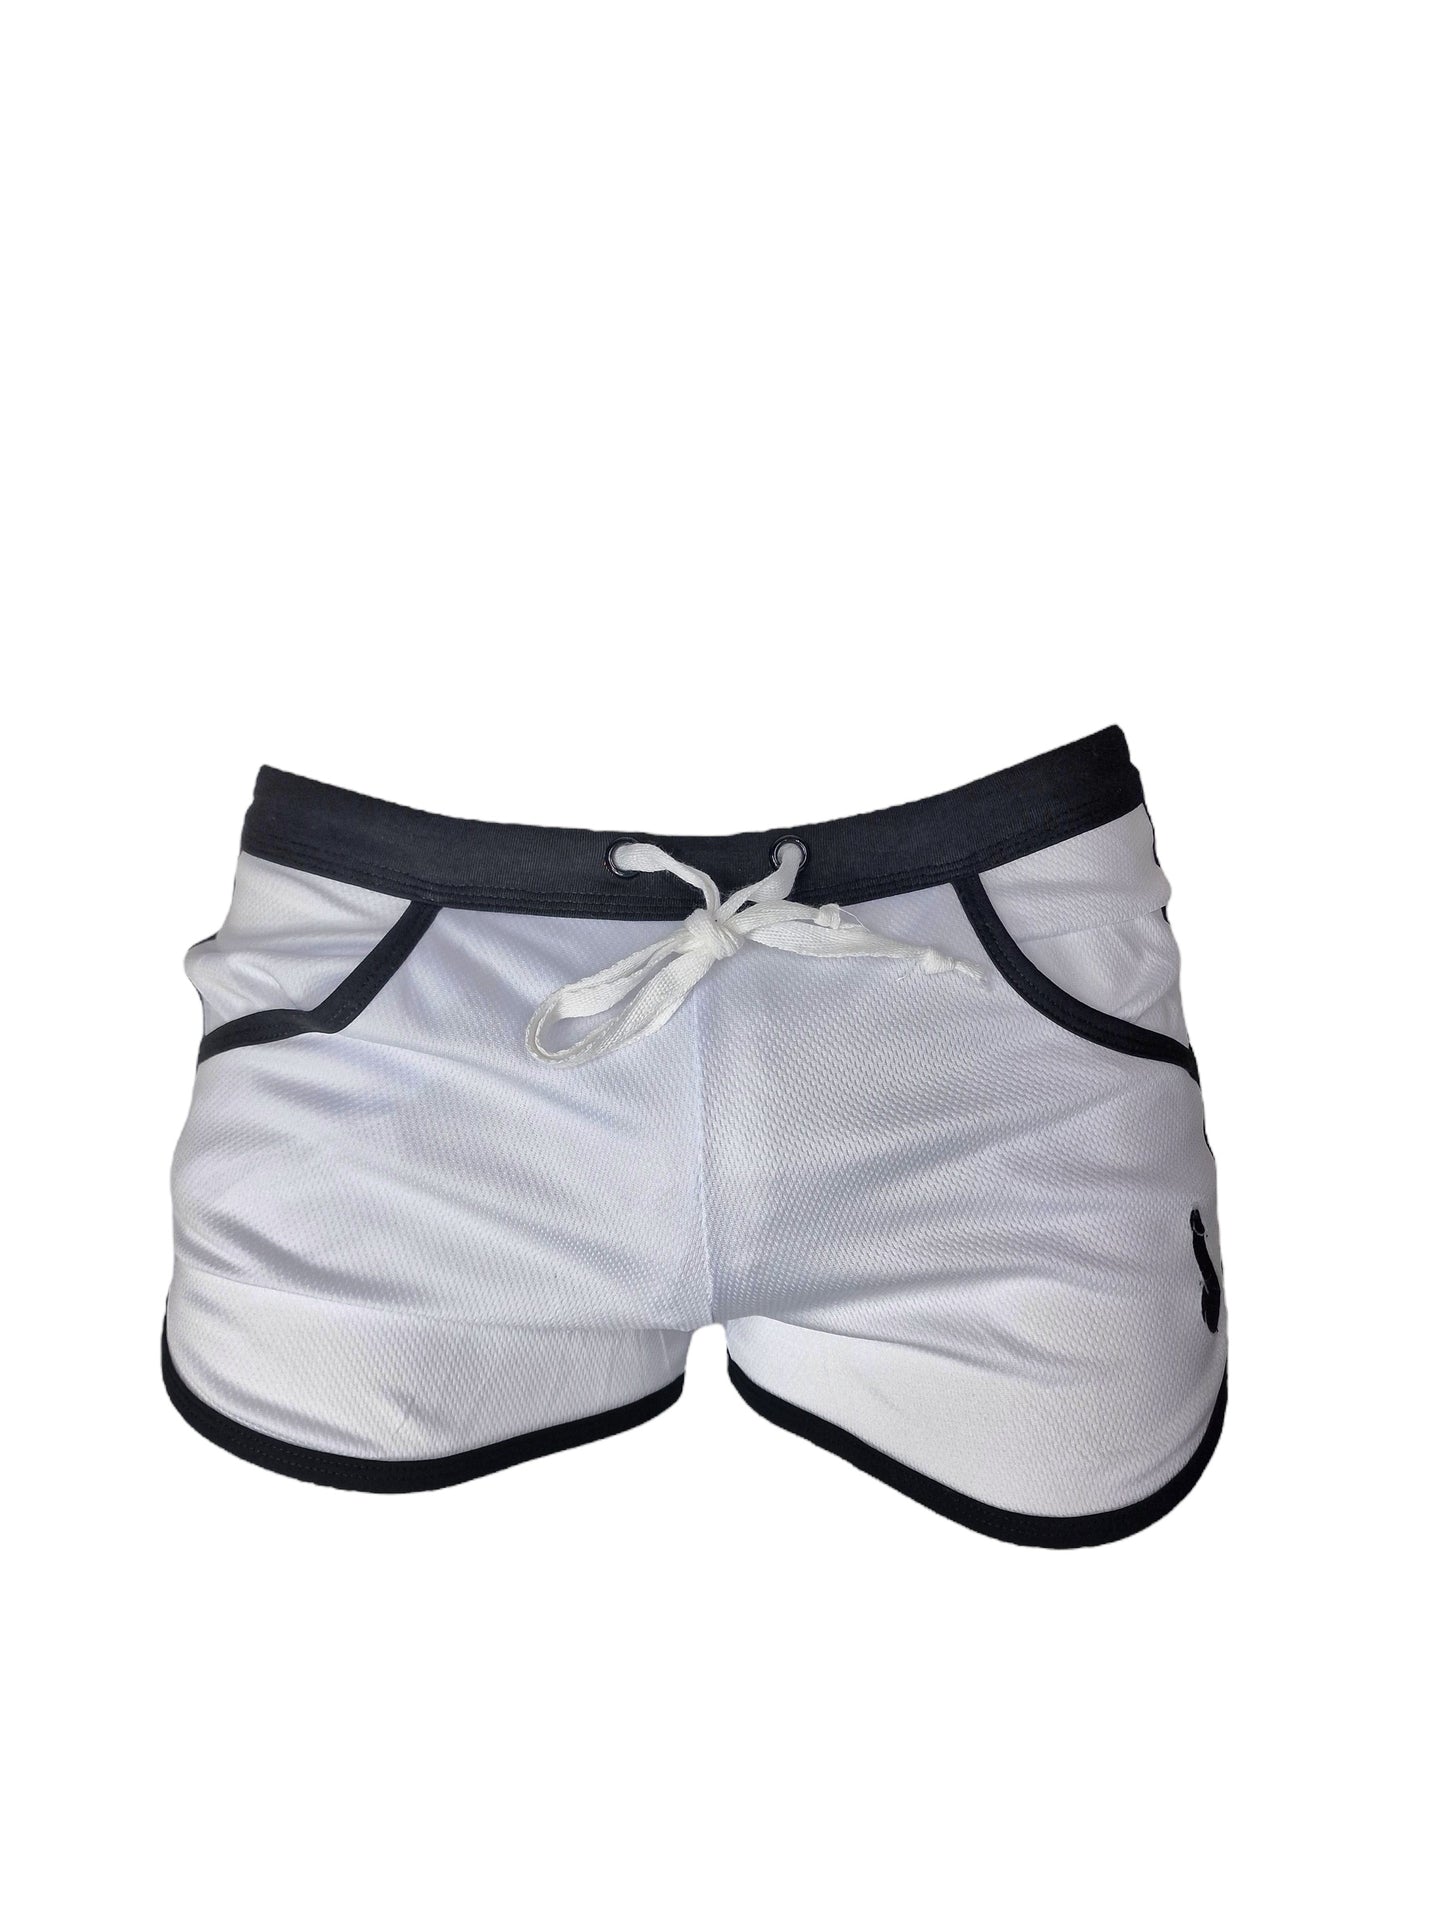 Shorts con suspensorio cosido - Blanco